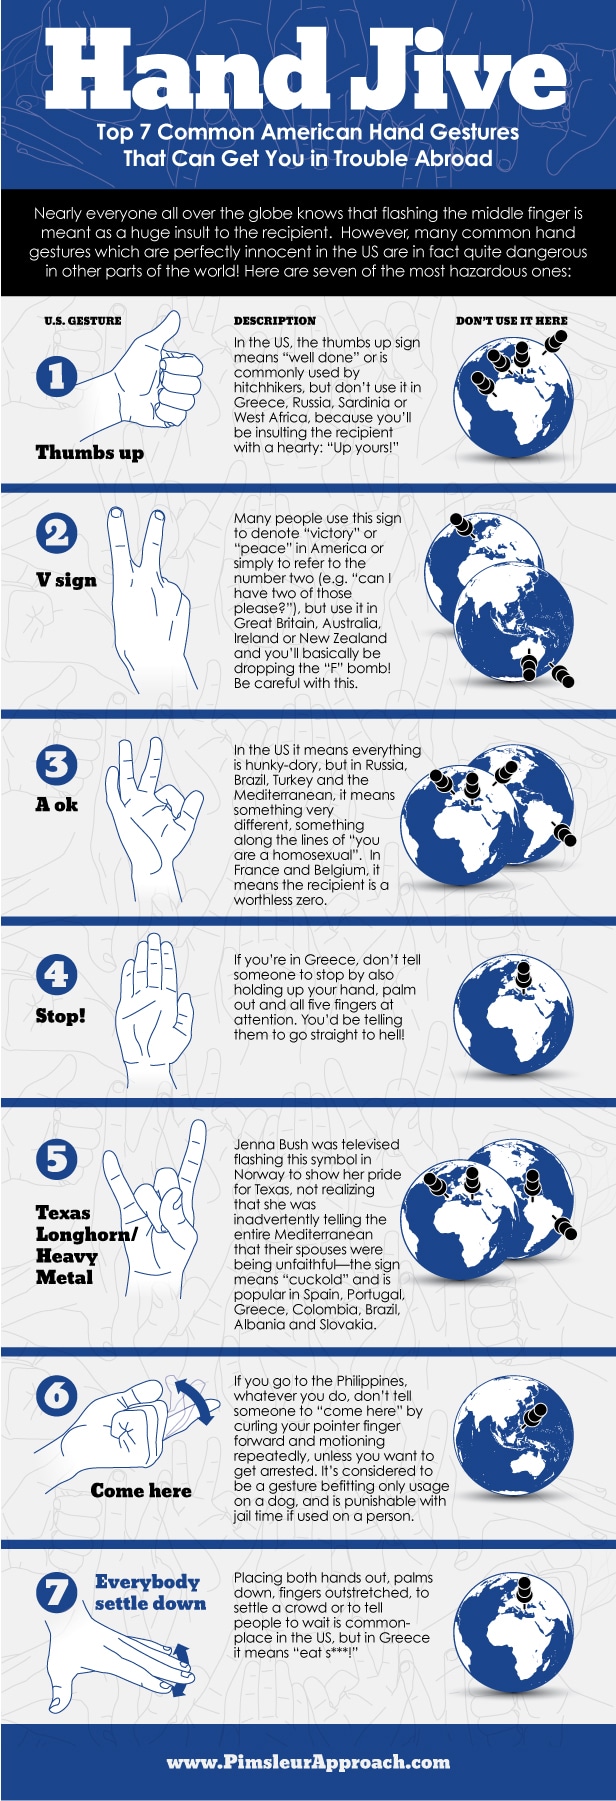 hand-jive-gesture-infographic